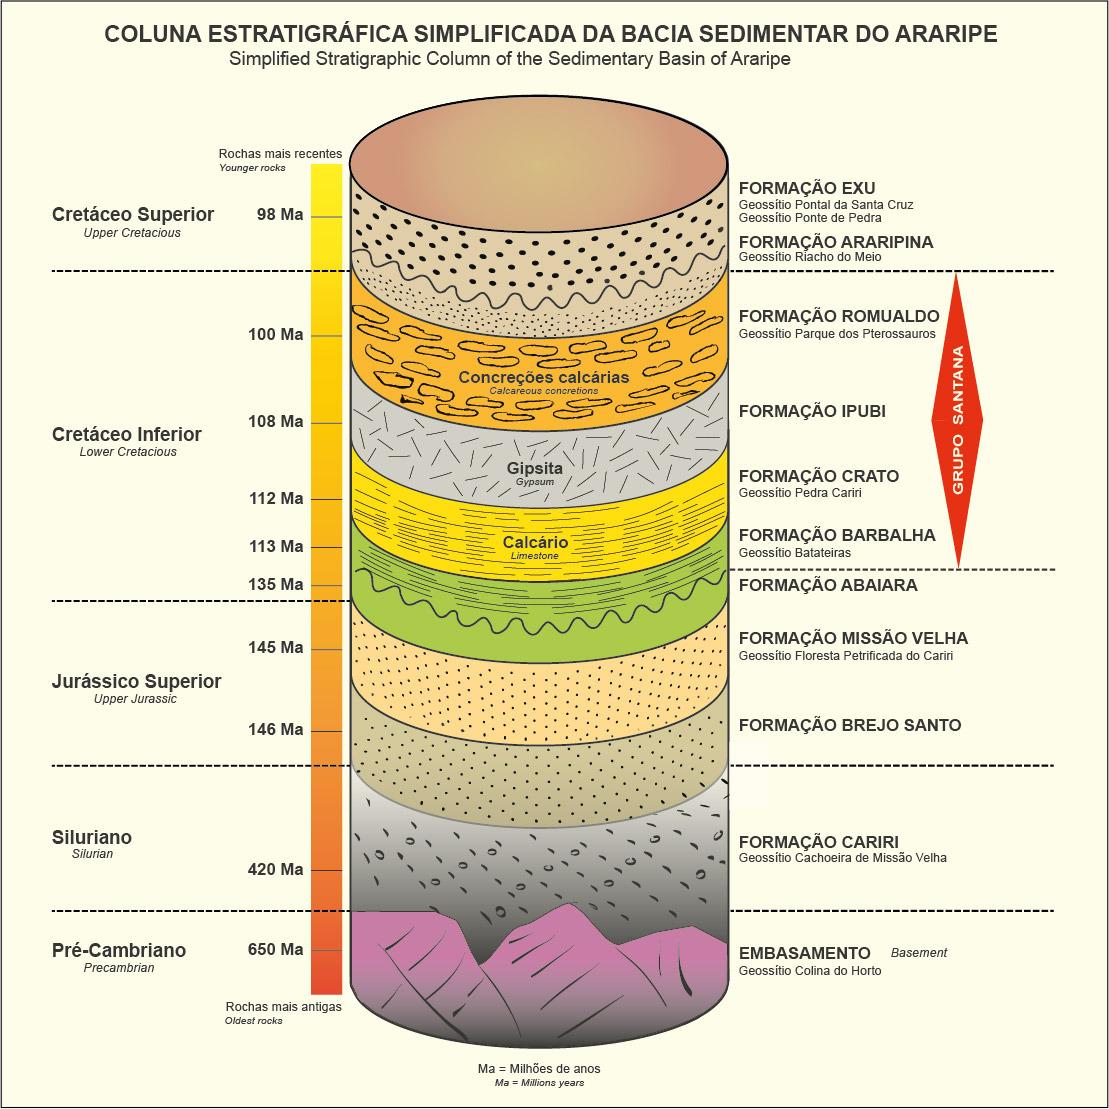 Coluna estratigráfica simplificada da Bacia Sedimentar do Araripe